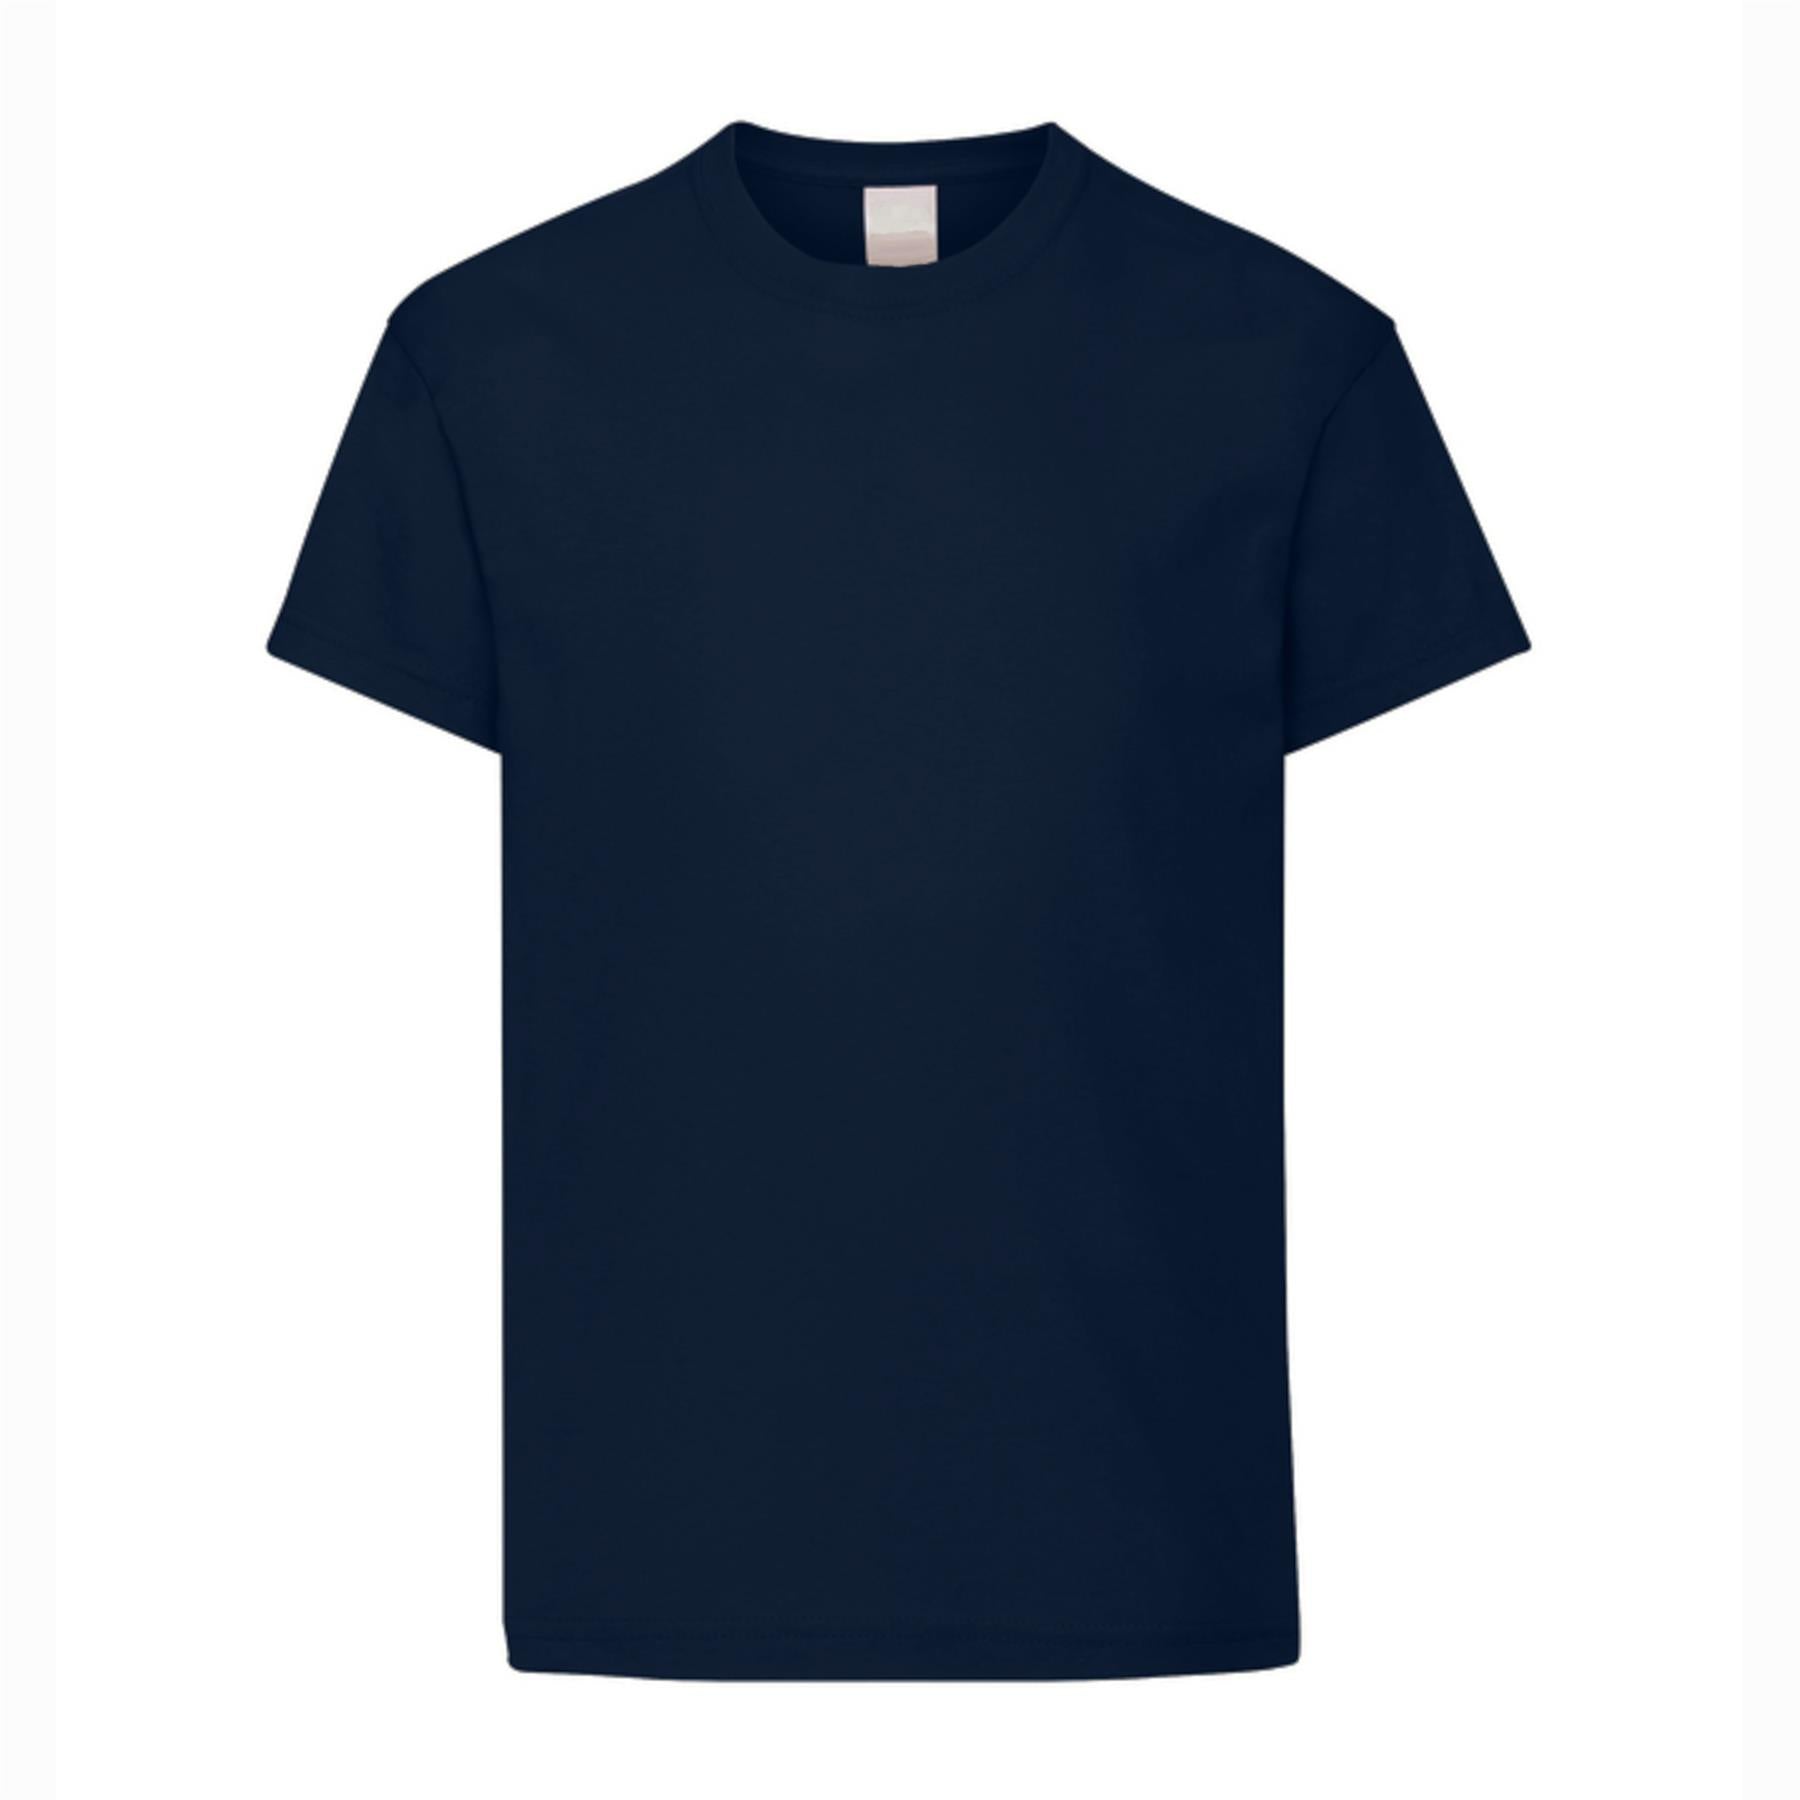 Unisex Navy Short Sleeve Plain T-Shirt